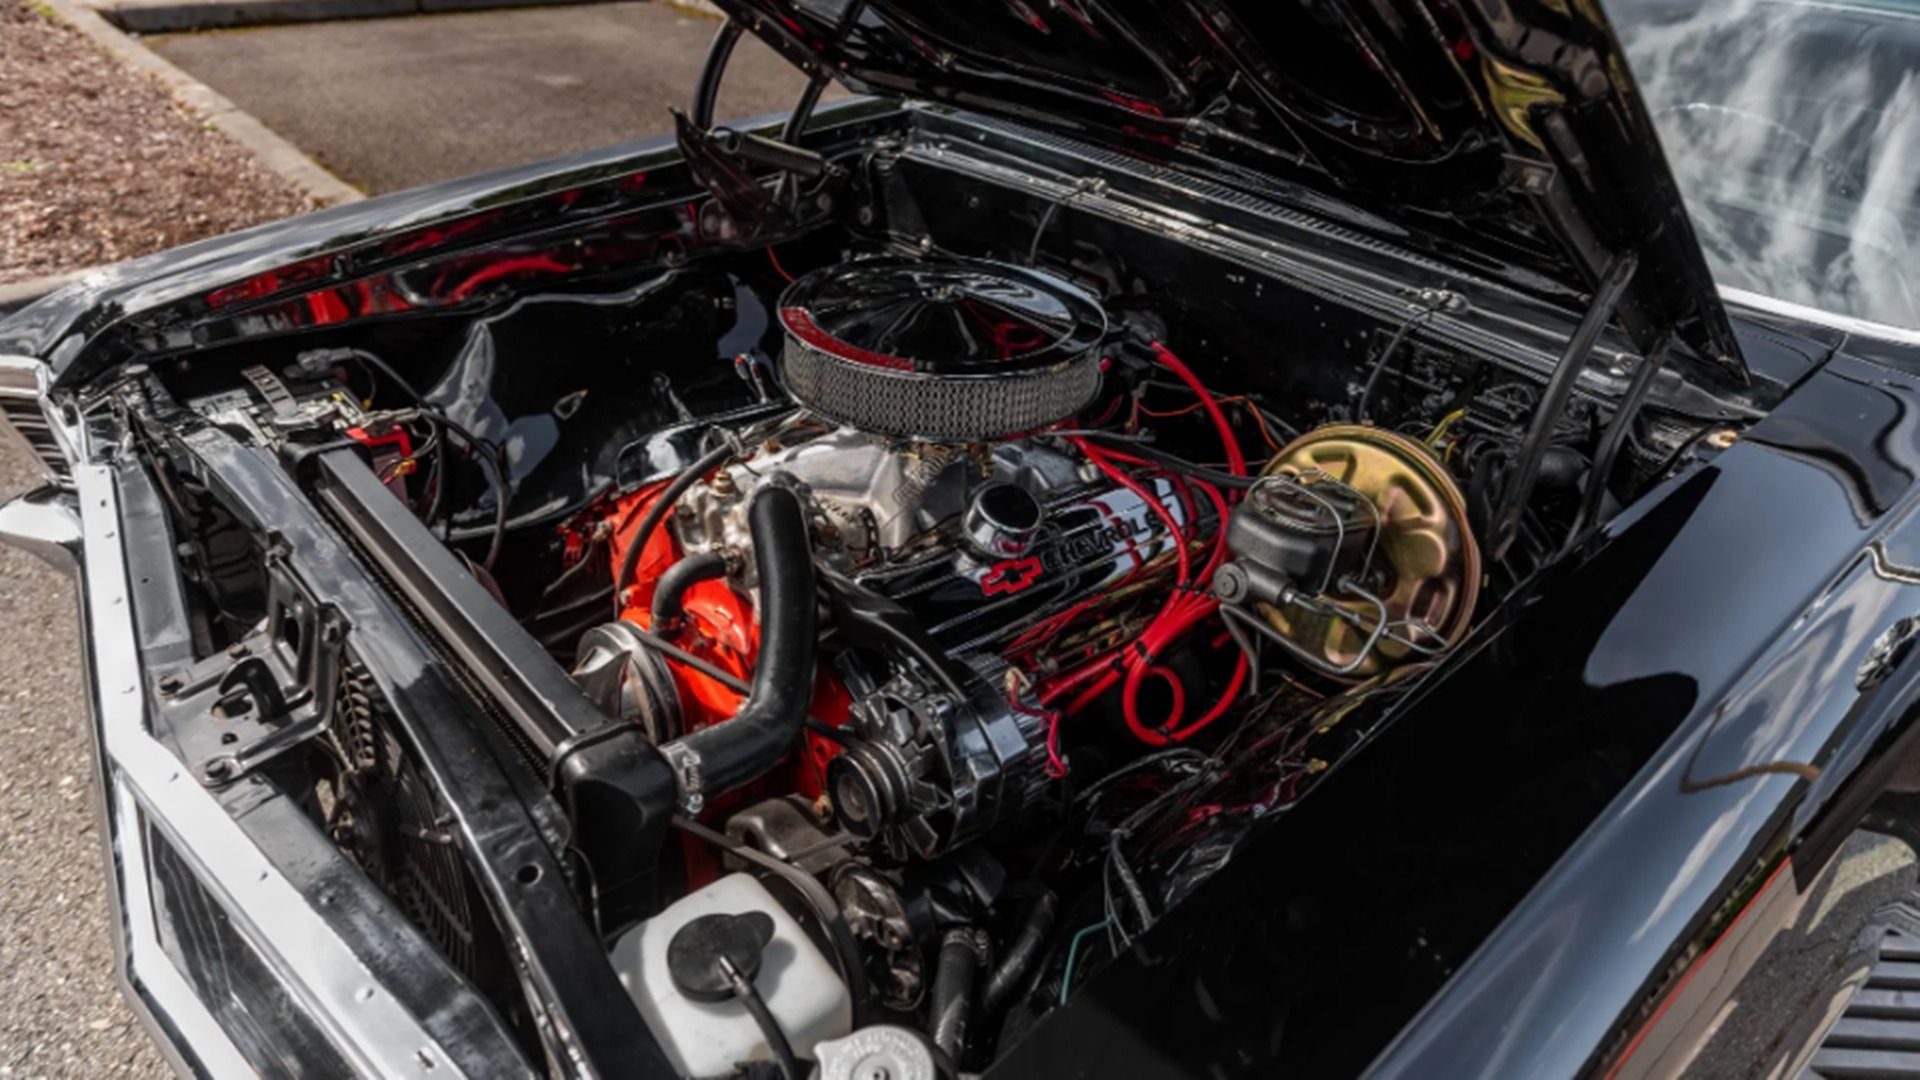 1967 Chevrolet Chevelle engine